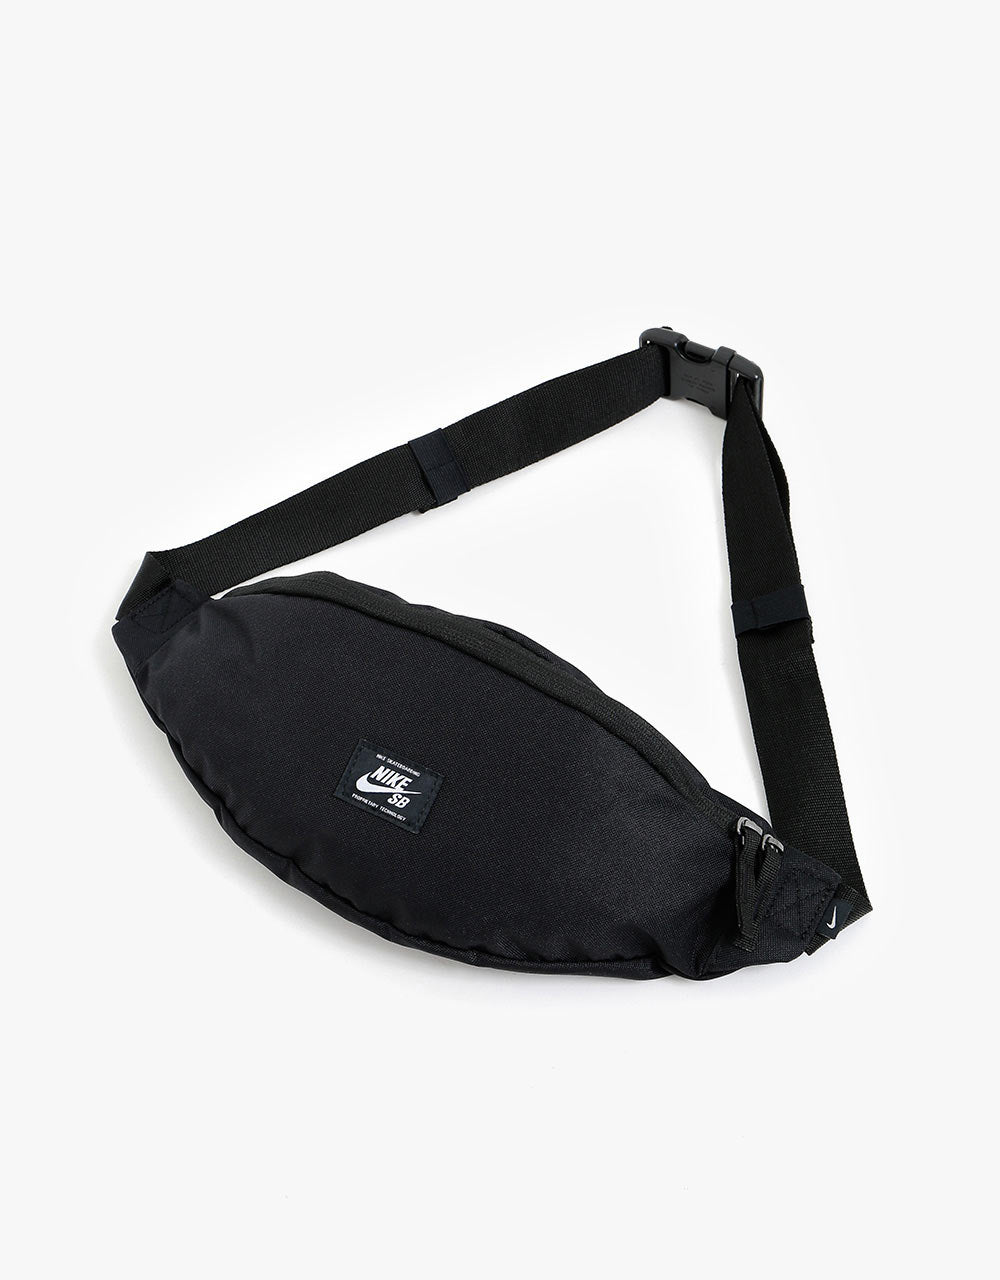 Nike Woven Heritage Cross Body Bag - Black/Black/White